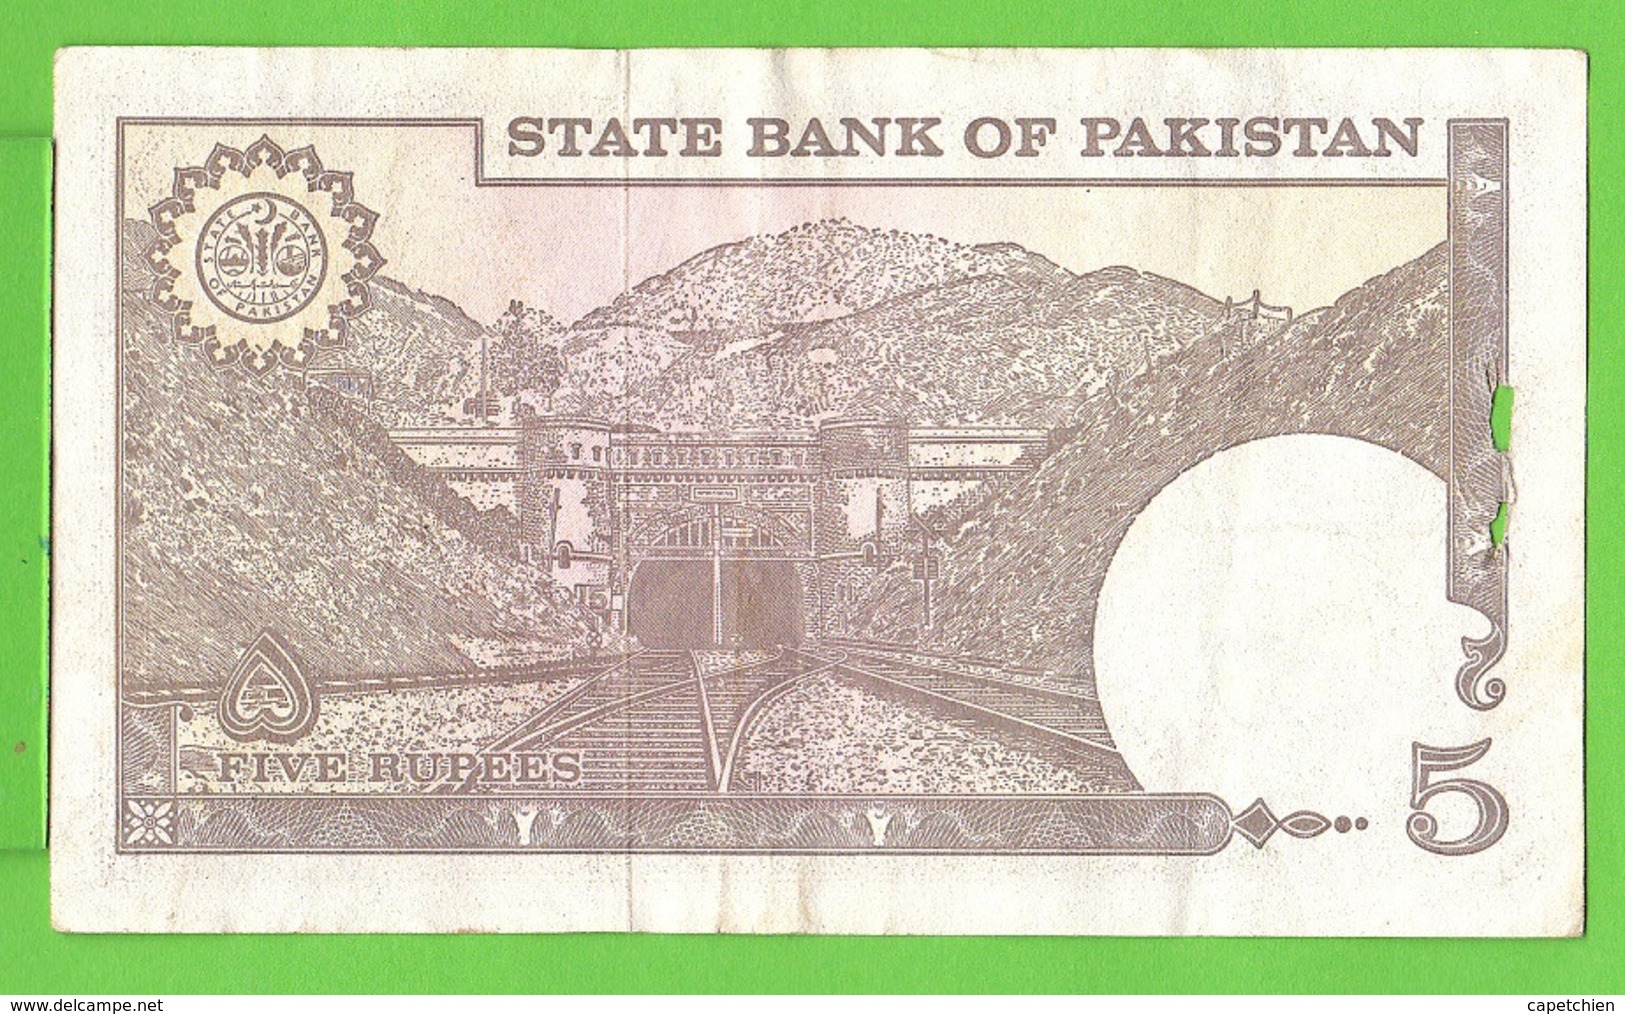 FIVE RUPEES - Pakistan